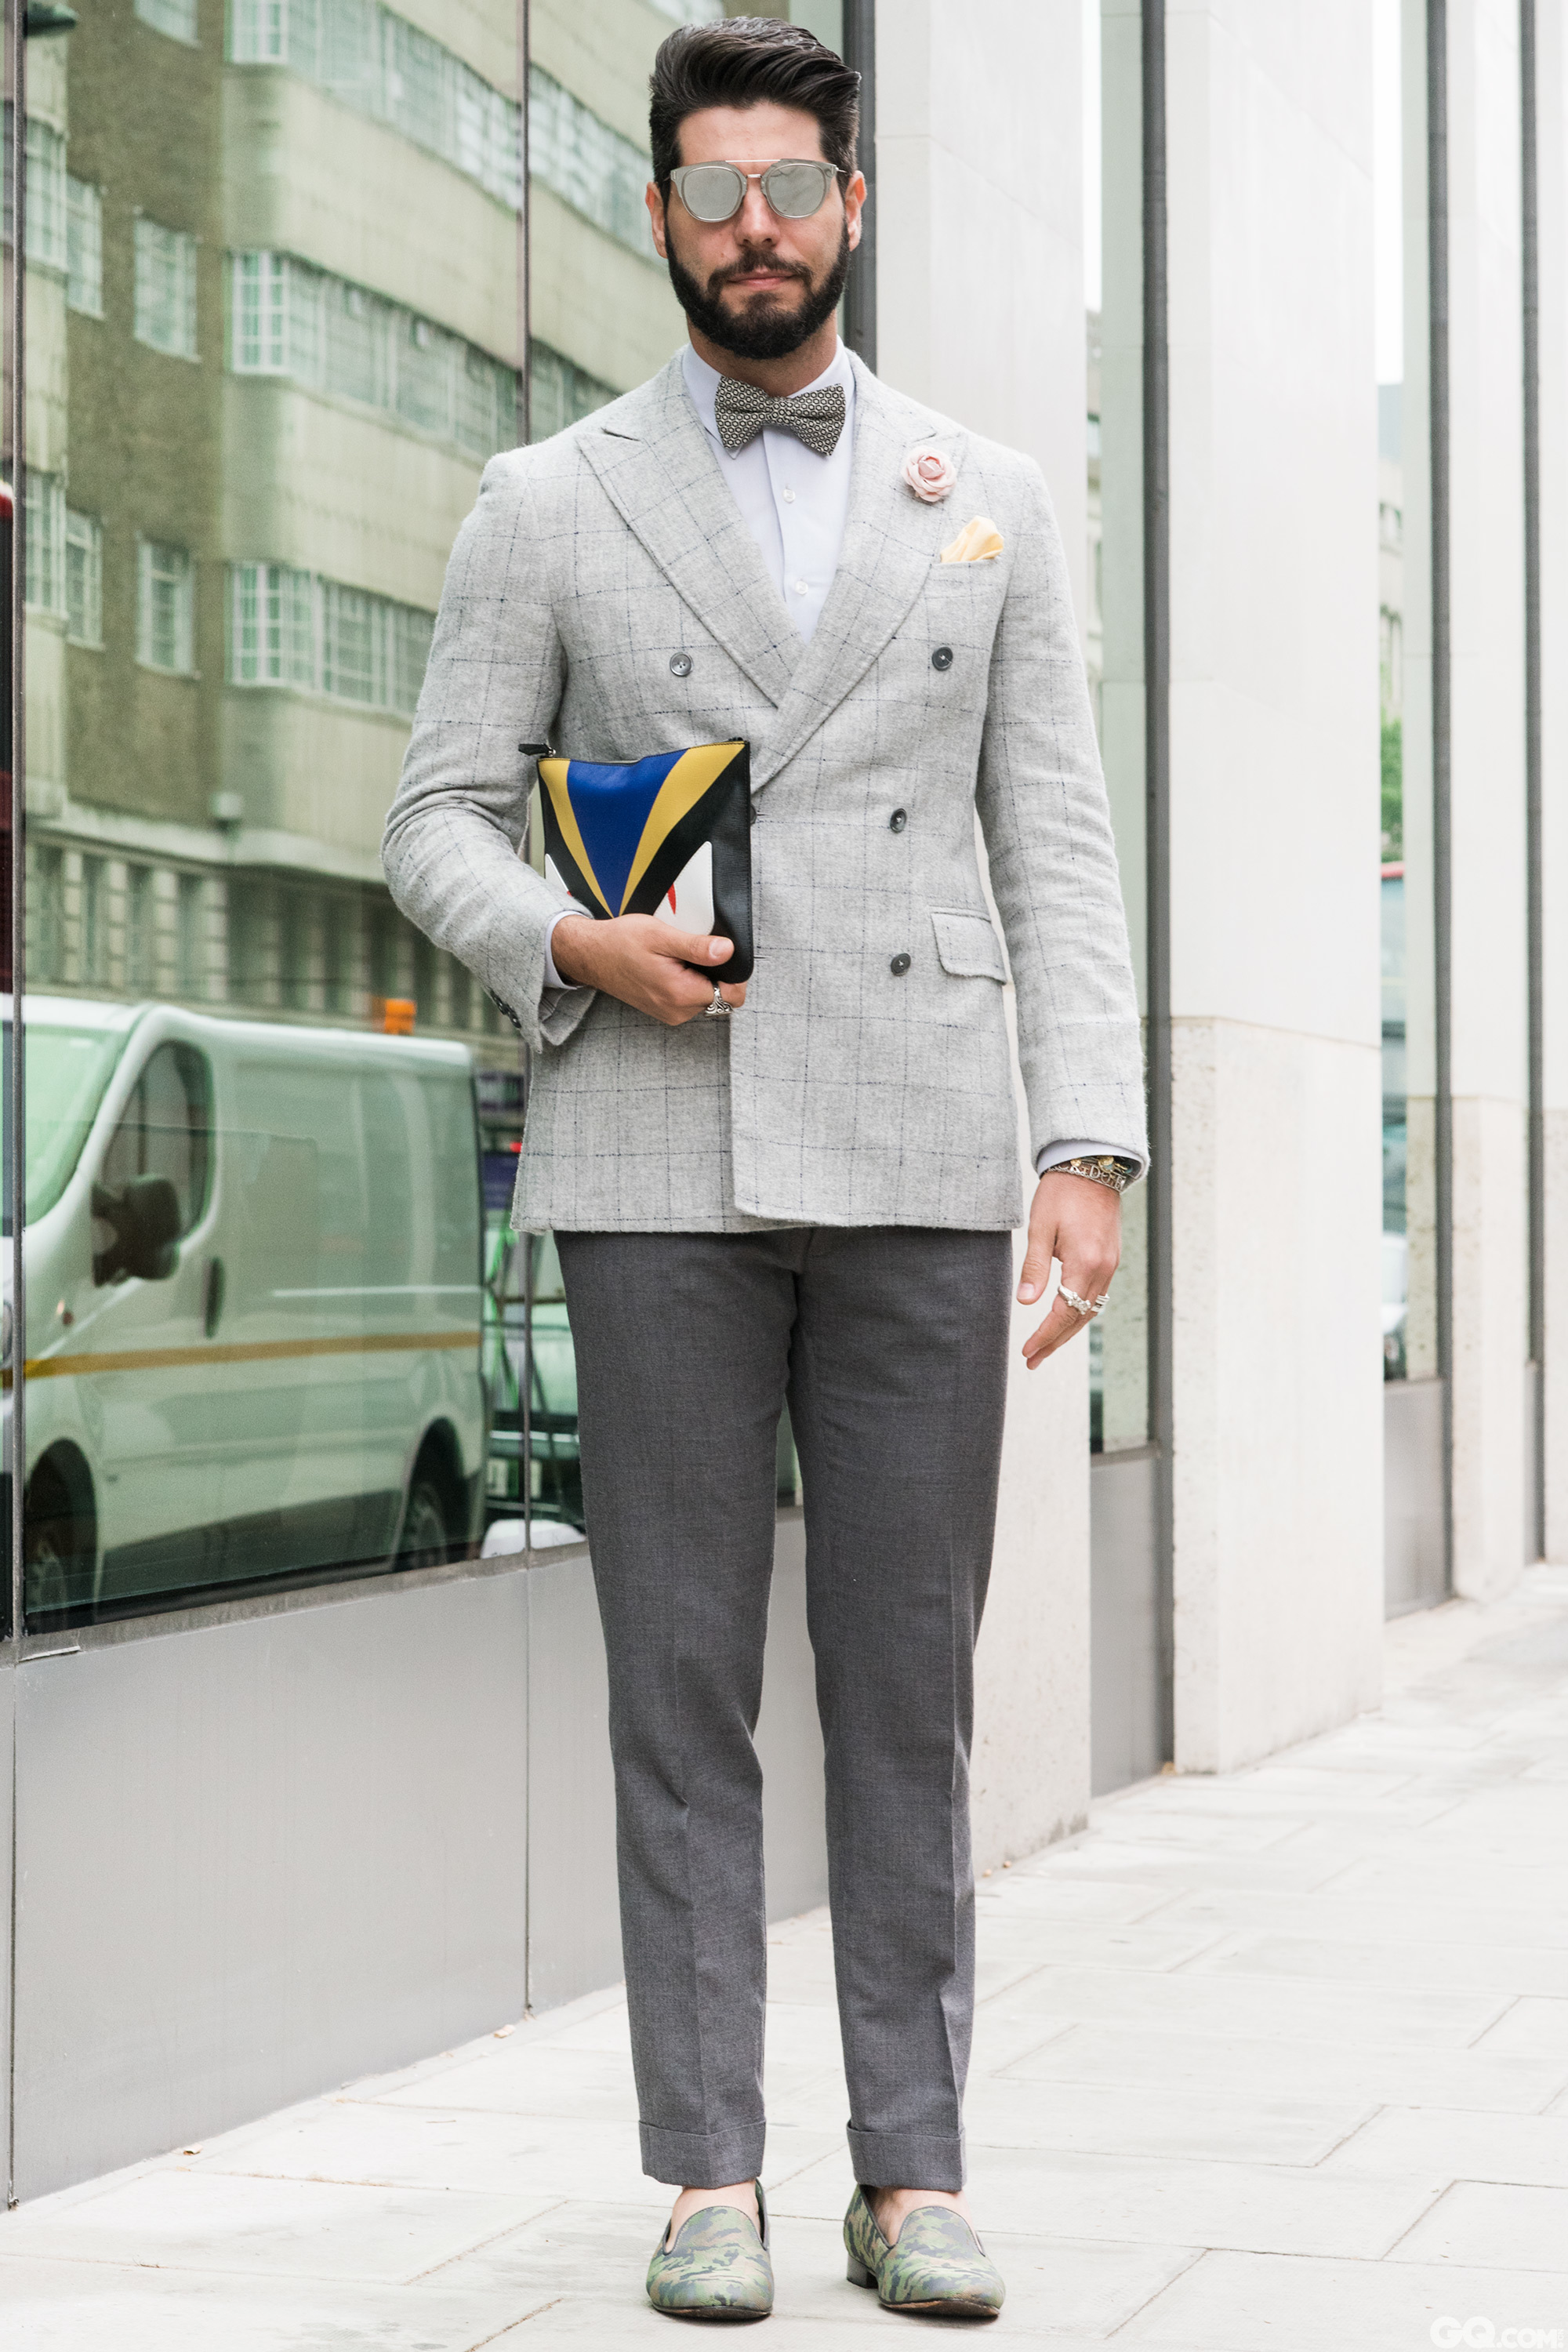 Kadu
Glasses: Dior Homme
Jacket: Tom Bellini
Shirt: VR
Bow tie: Zara
Trousers: Gant
Shoes: Blue Bird
Bag: Fendi

Inspiration: 50 shades of grey. 50度灰。